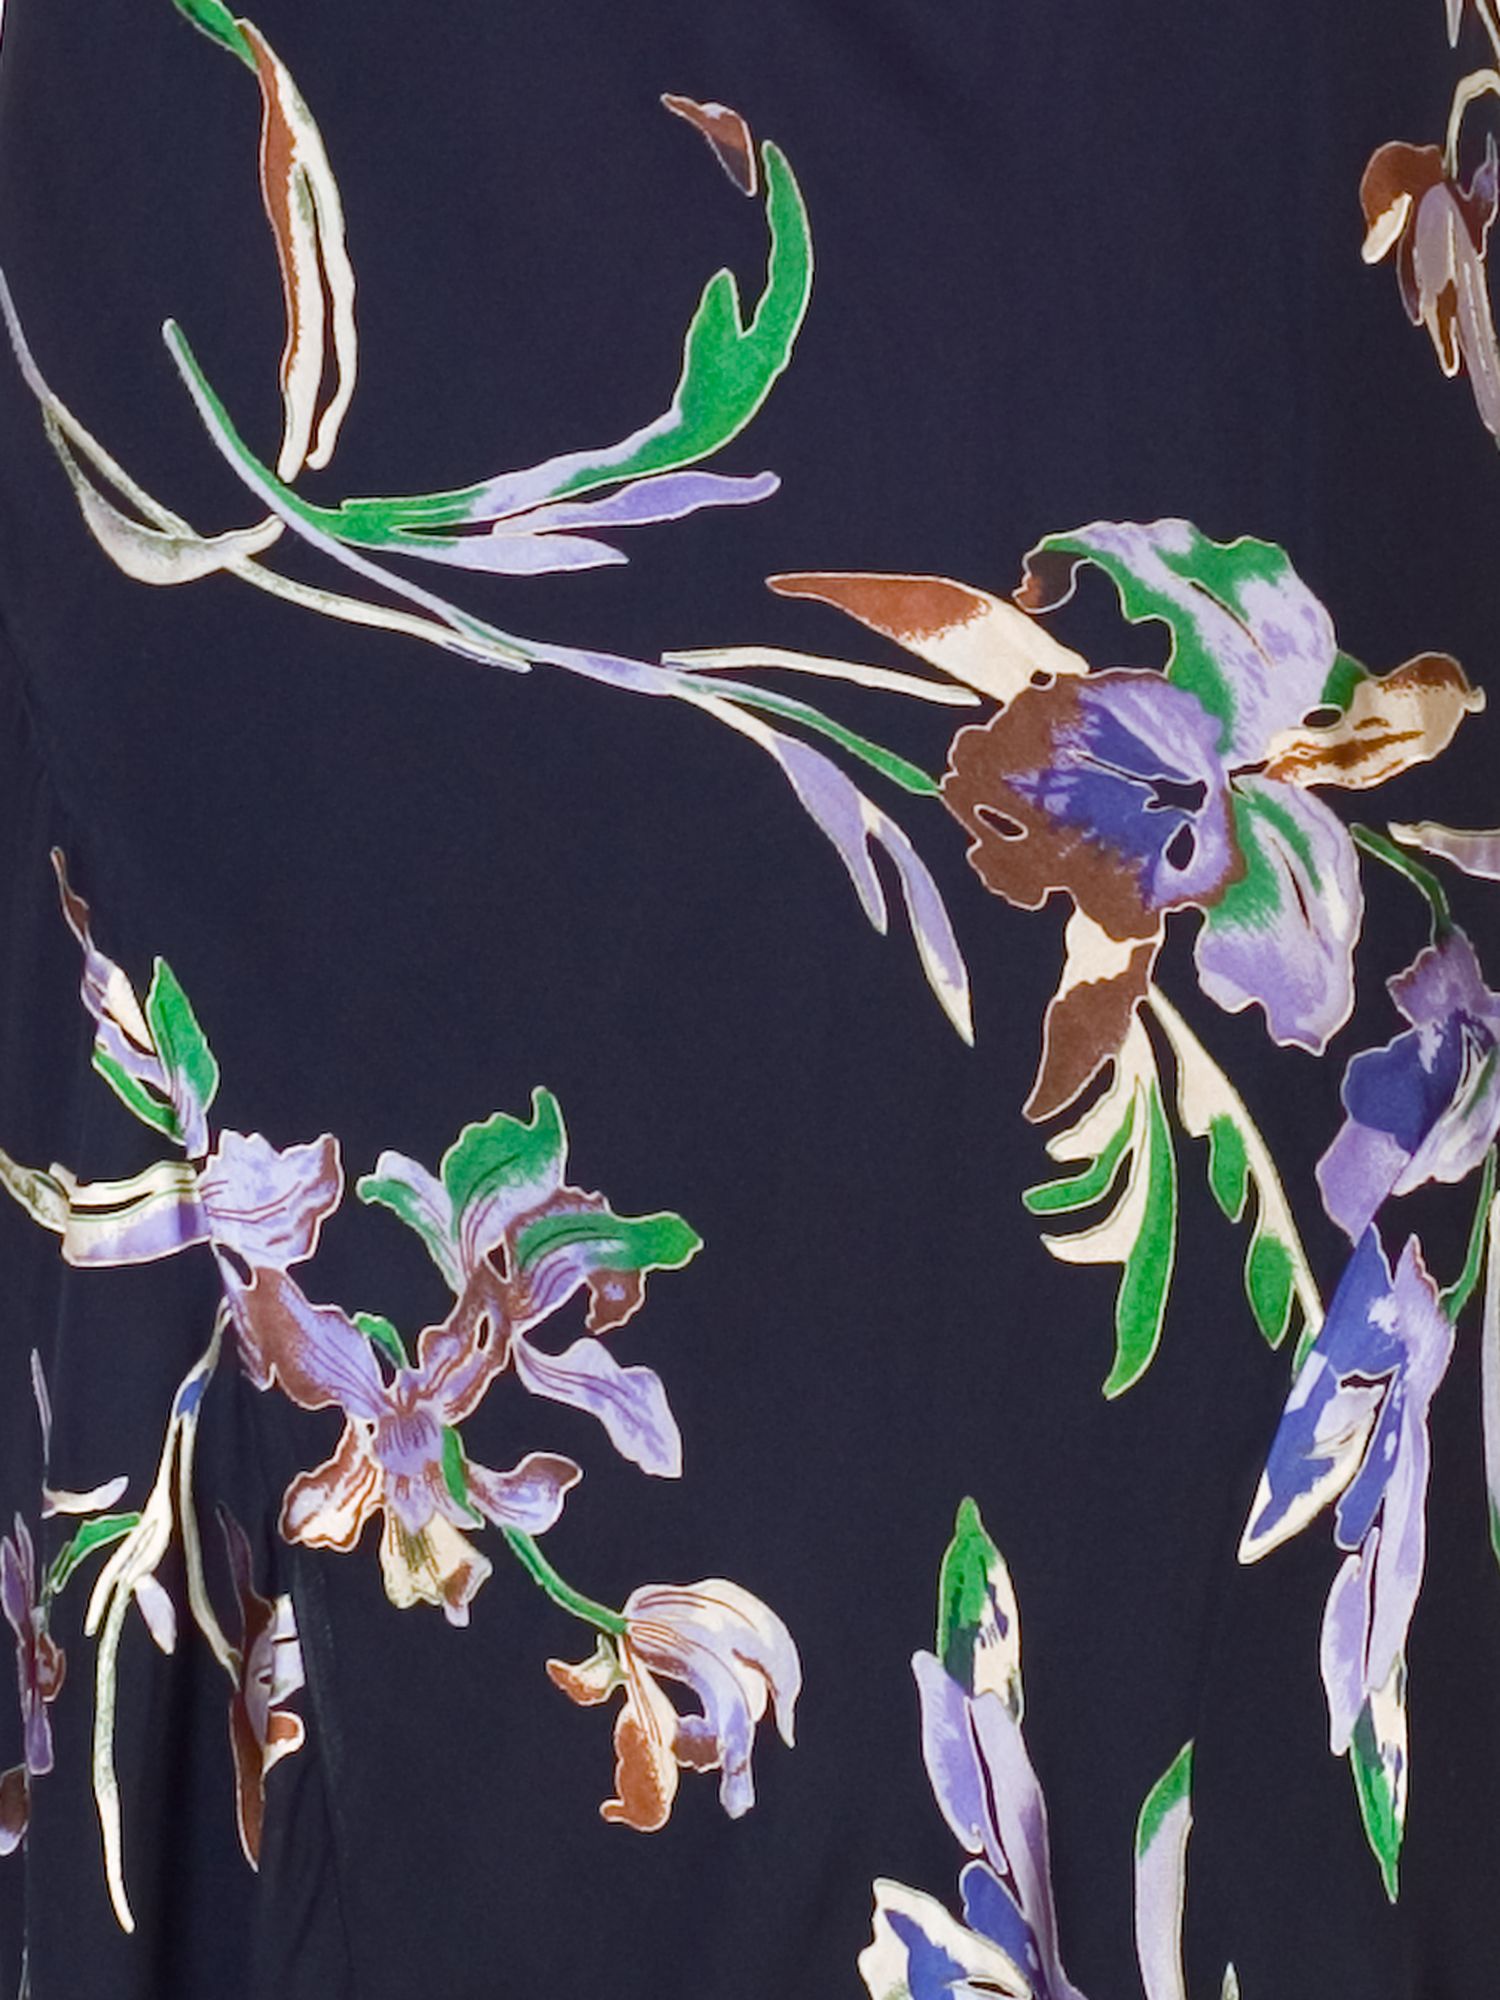 Buy chesca Iris Floral Print Devoree Sleeveless Midi Dress, Navy/Multi Online at johnlewis.com